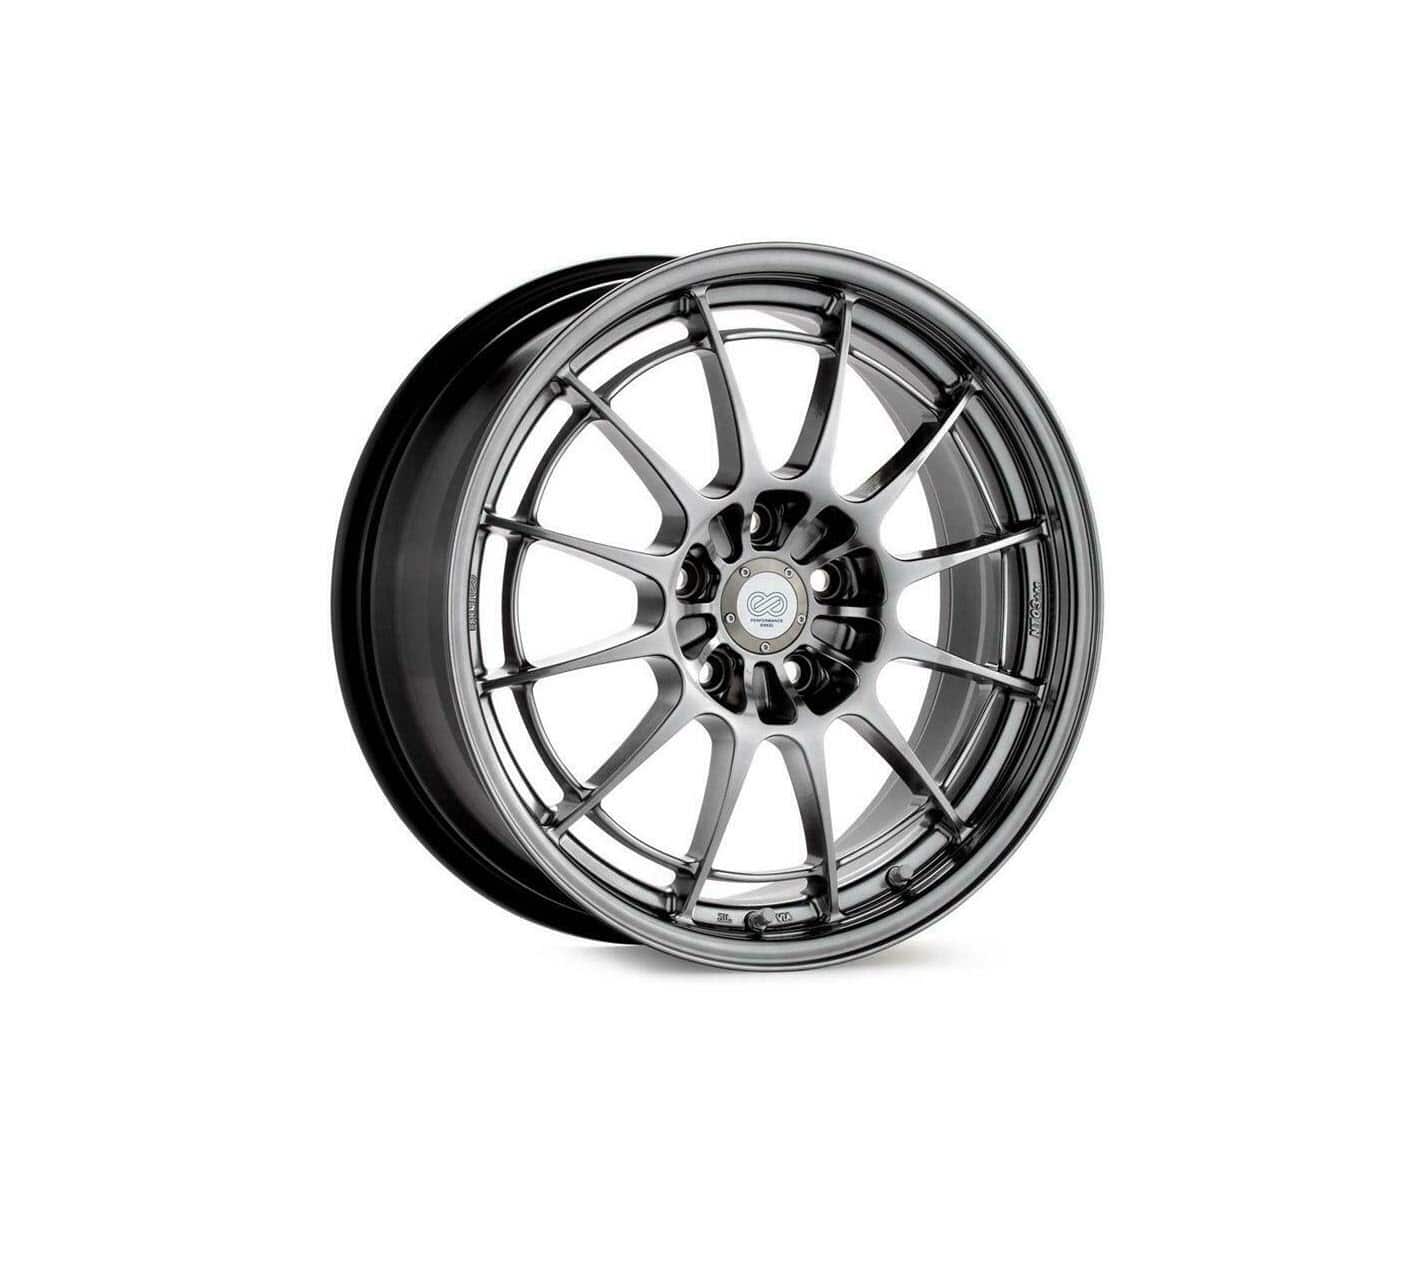 Enkei NT03+M 18x7.5 5x114.3 42mm - Hyper Silver Wheel - Dirty Racing Products